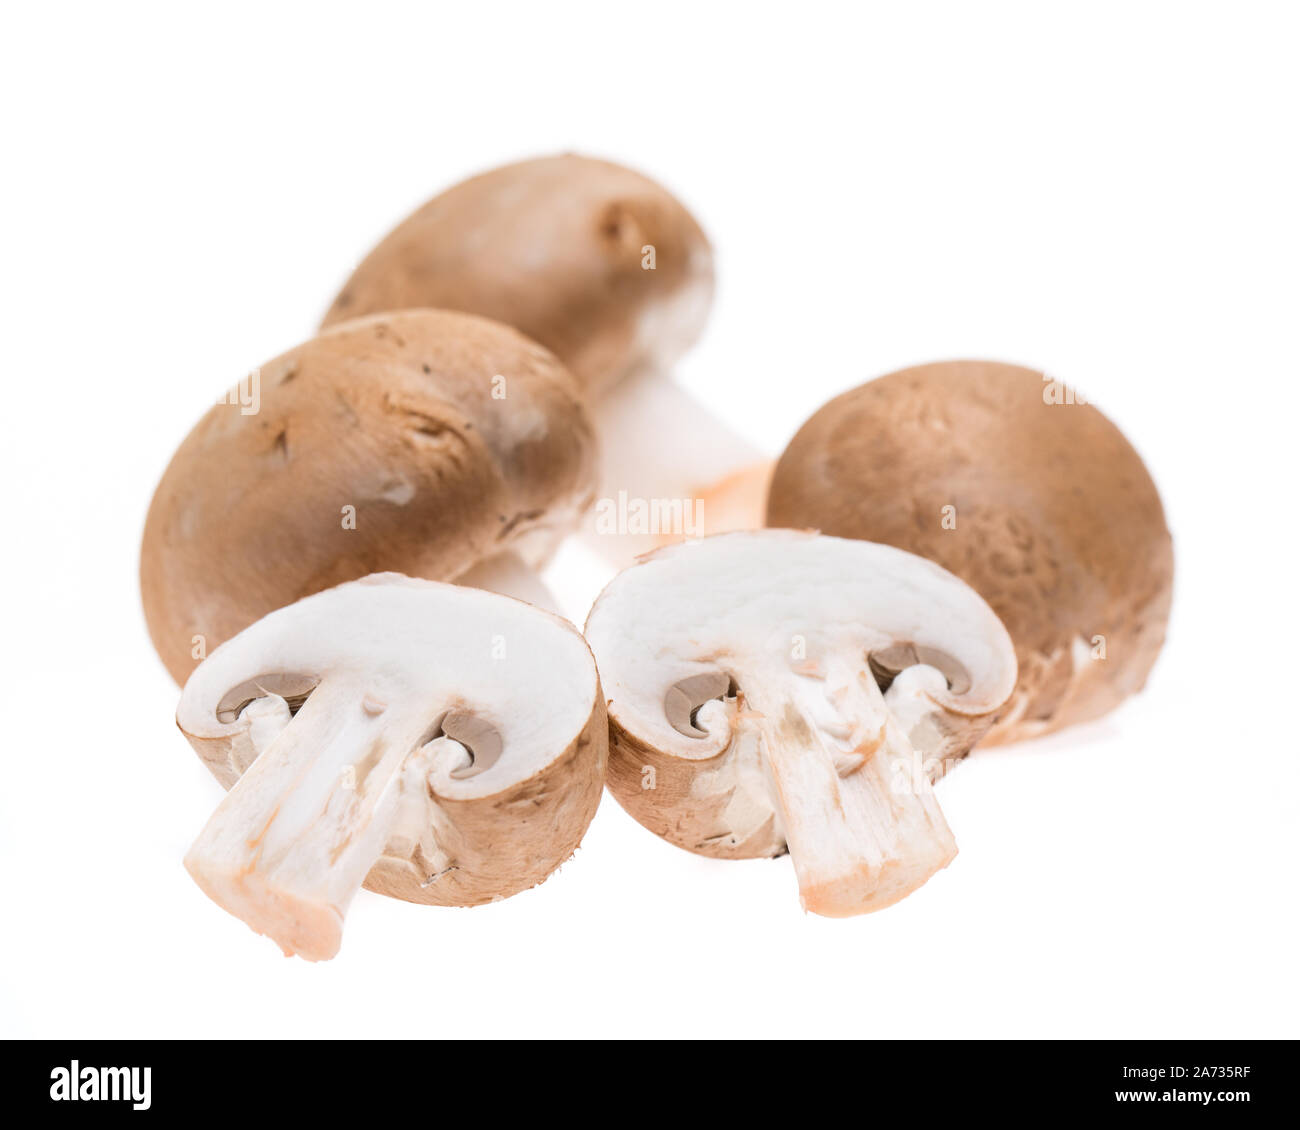 some Mushrooms on white background Stock Photo